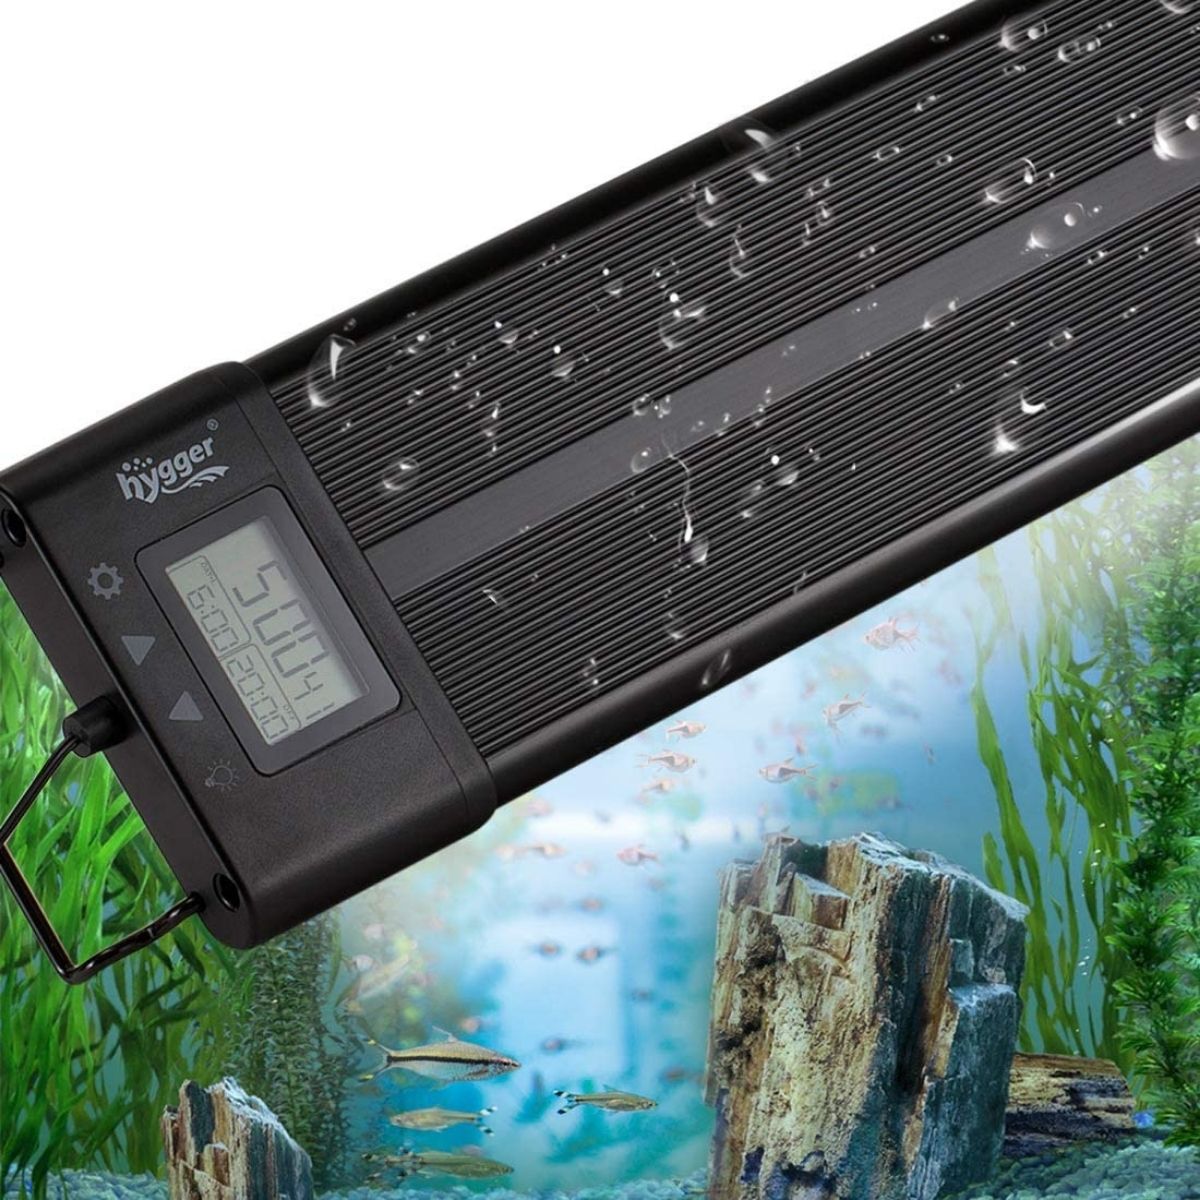 hygger aquarium programmable led light review